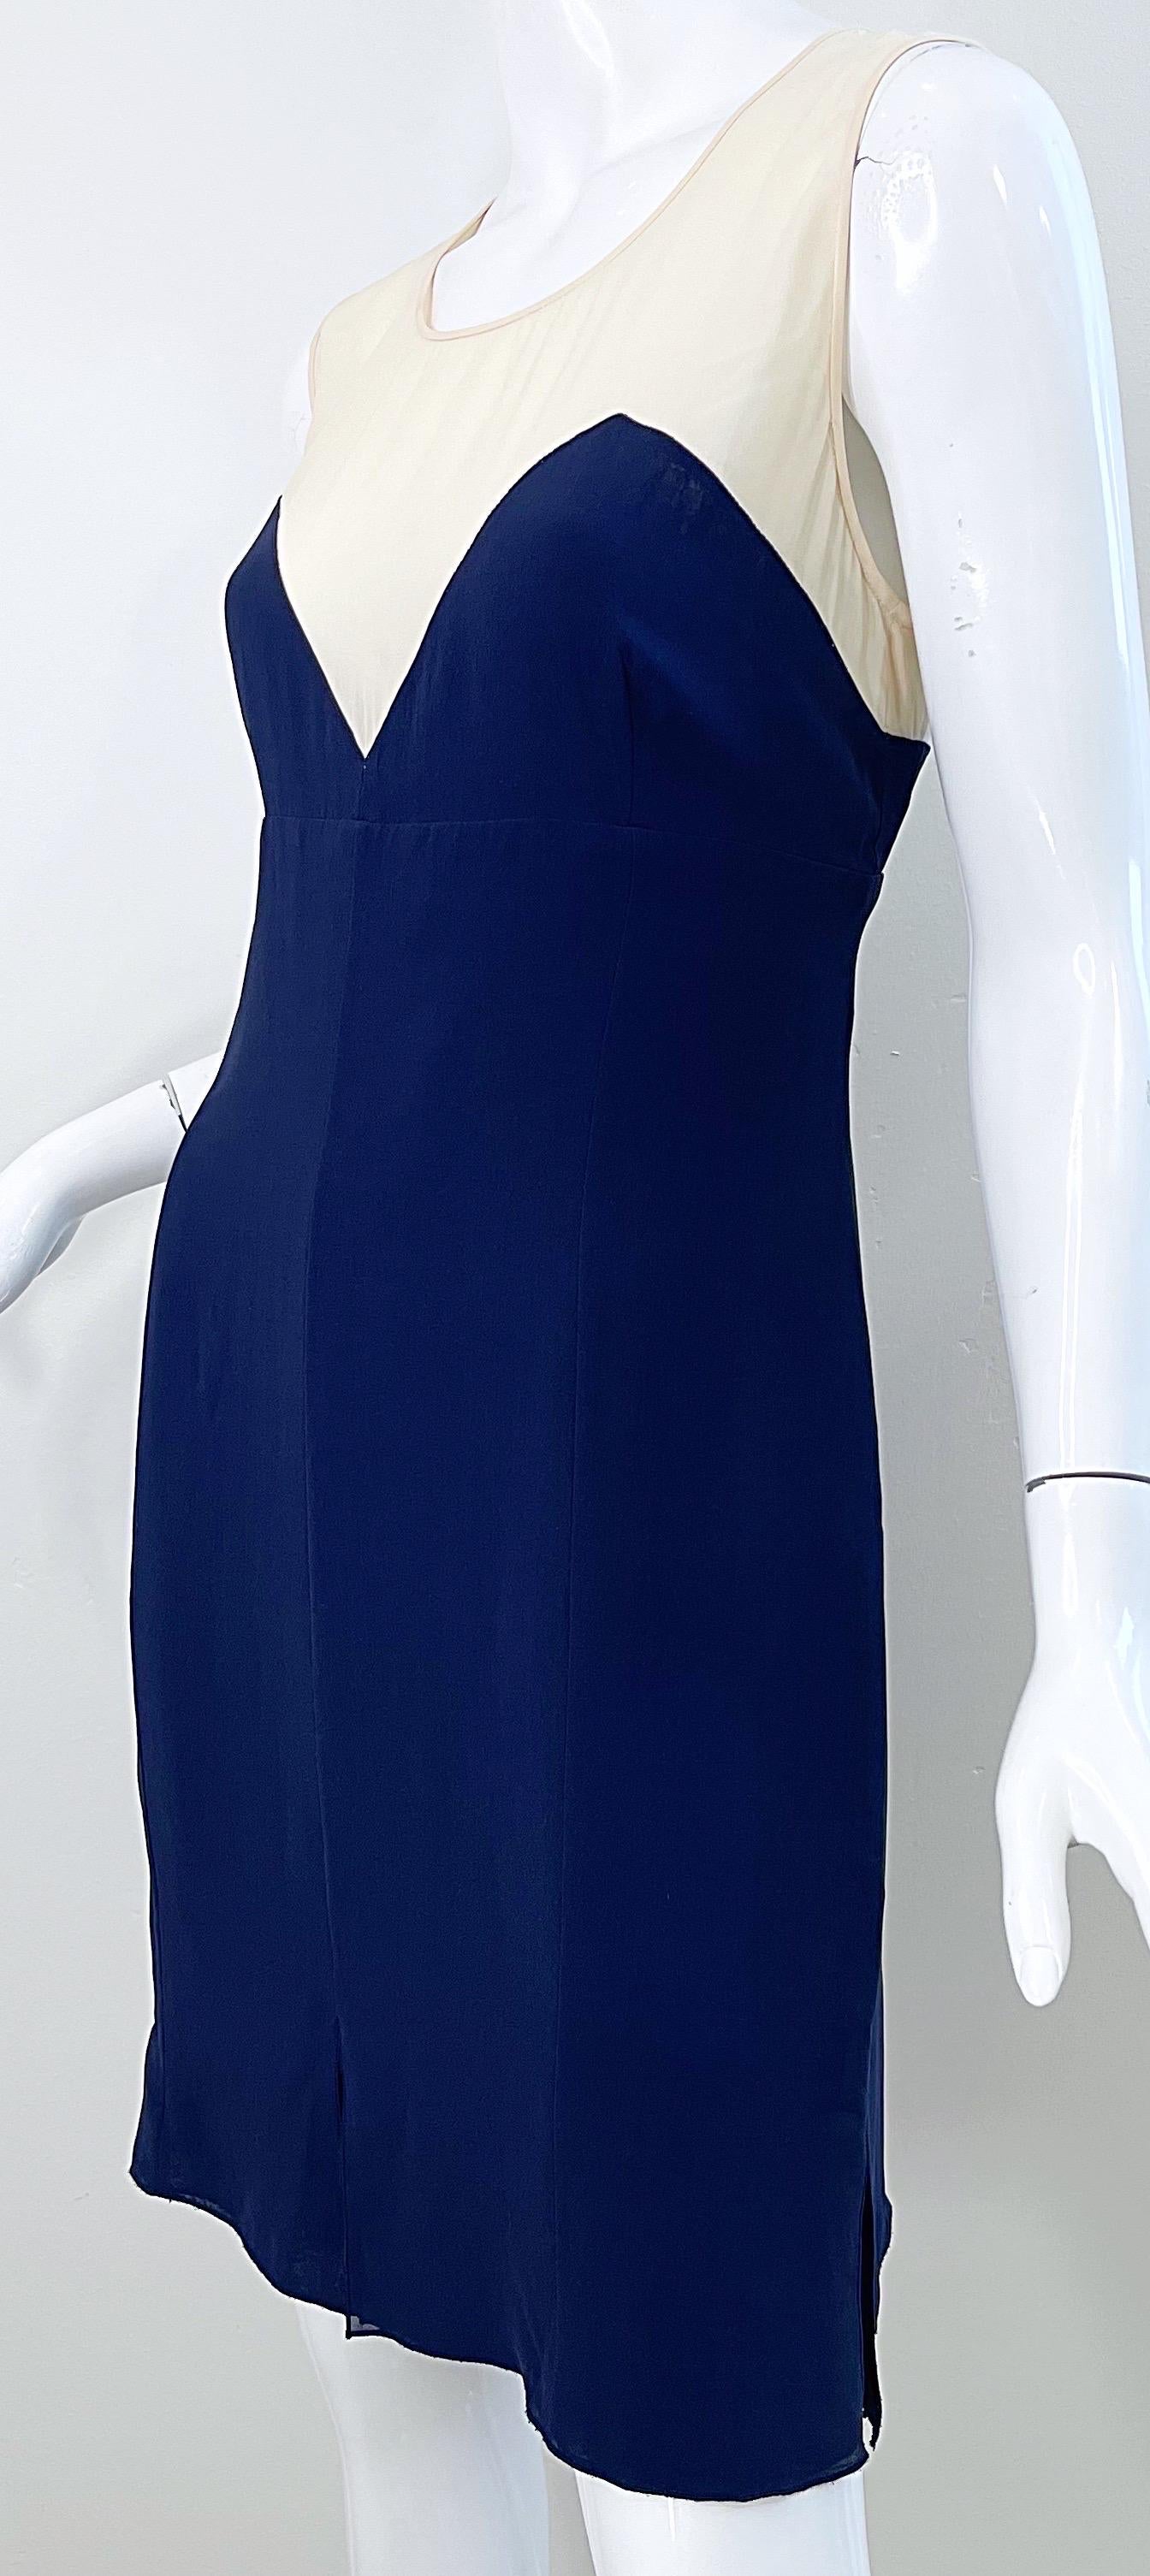 Karl Lagerfeld 1980s Size 44 / US 10 Navy Blue Silk Chiffon Vintage 80s Dress For Sale 5